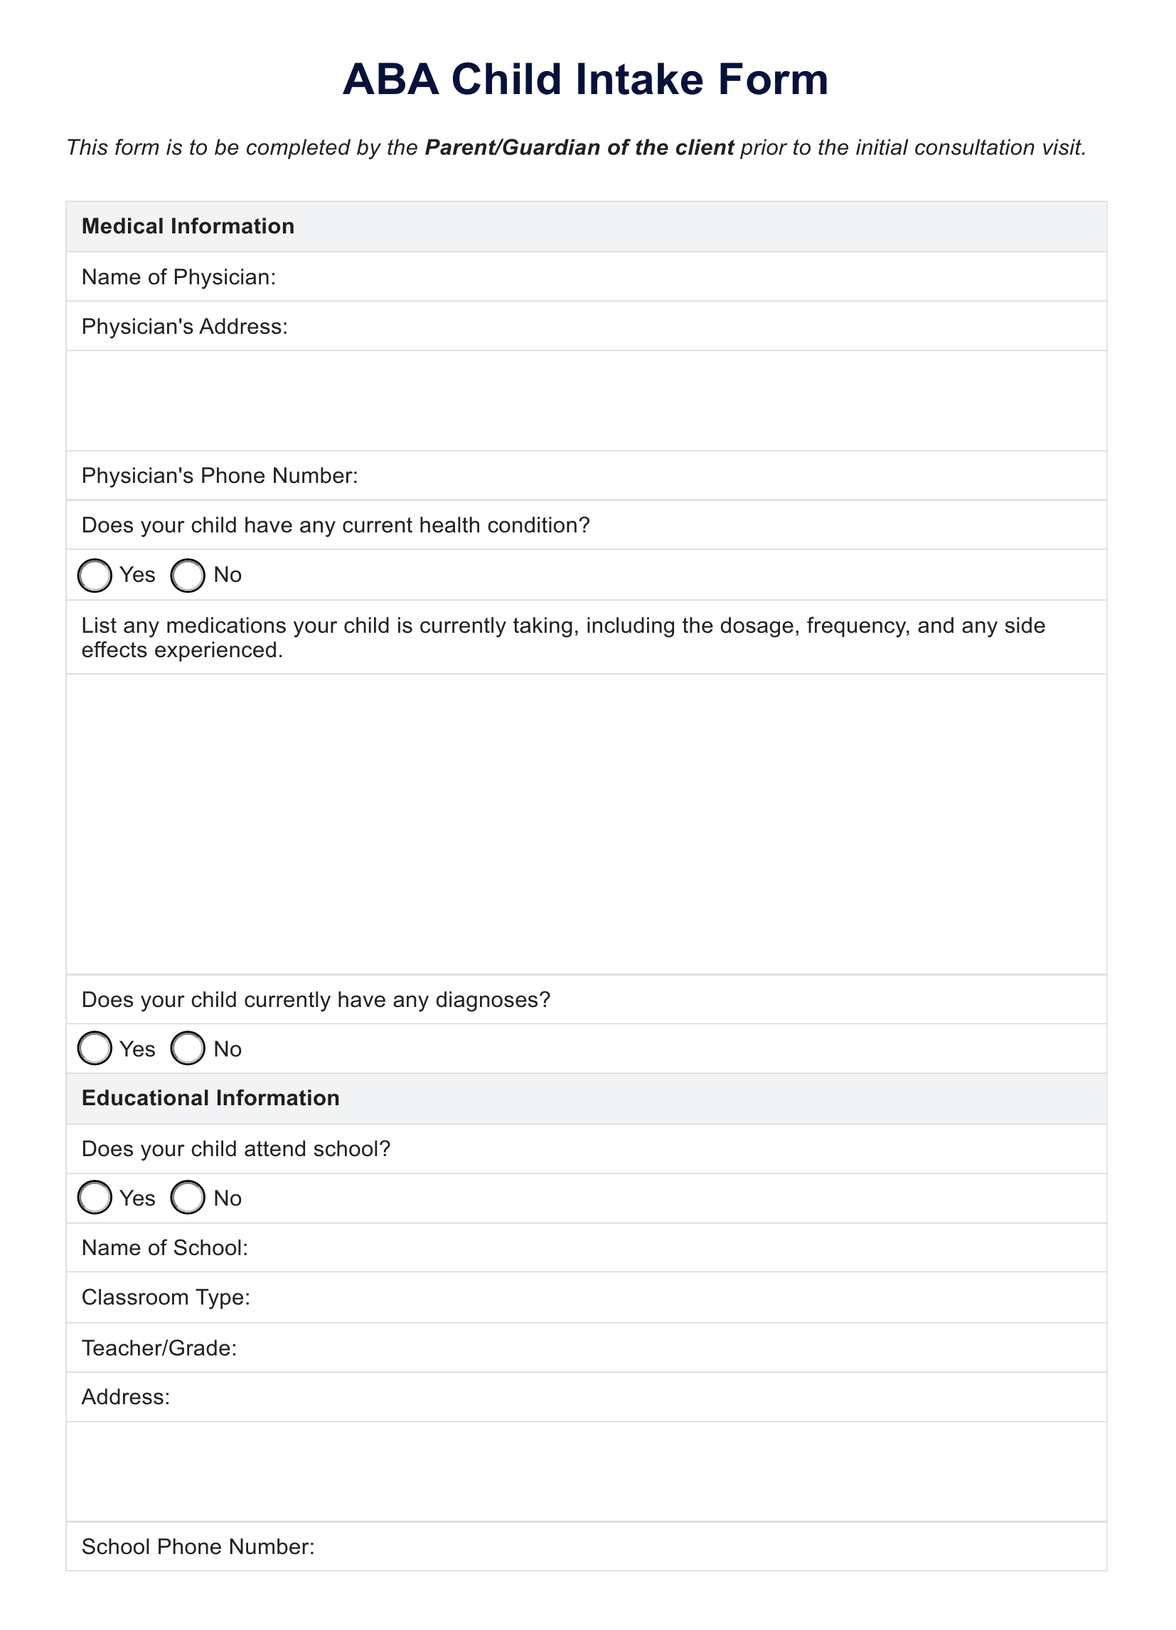 ABA Intake Form PDF Example